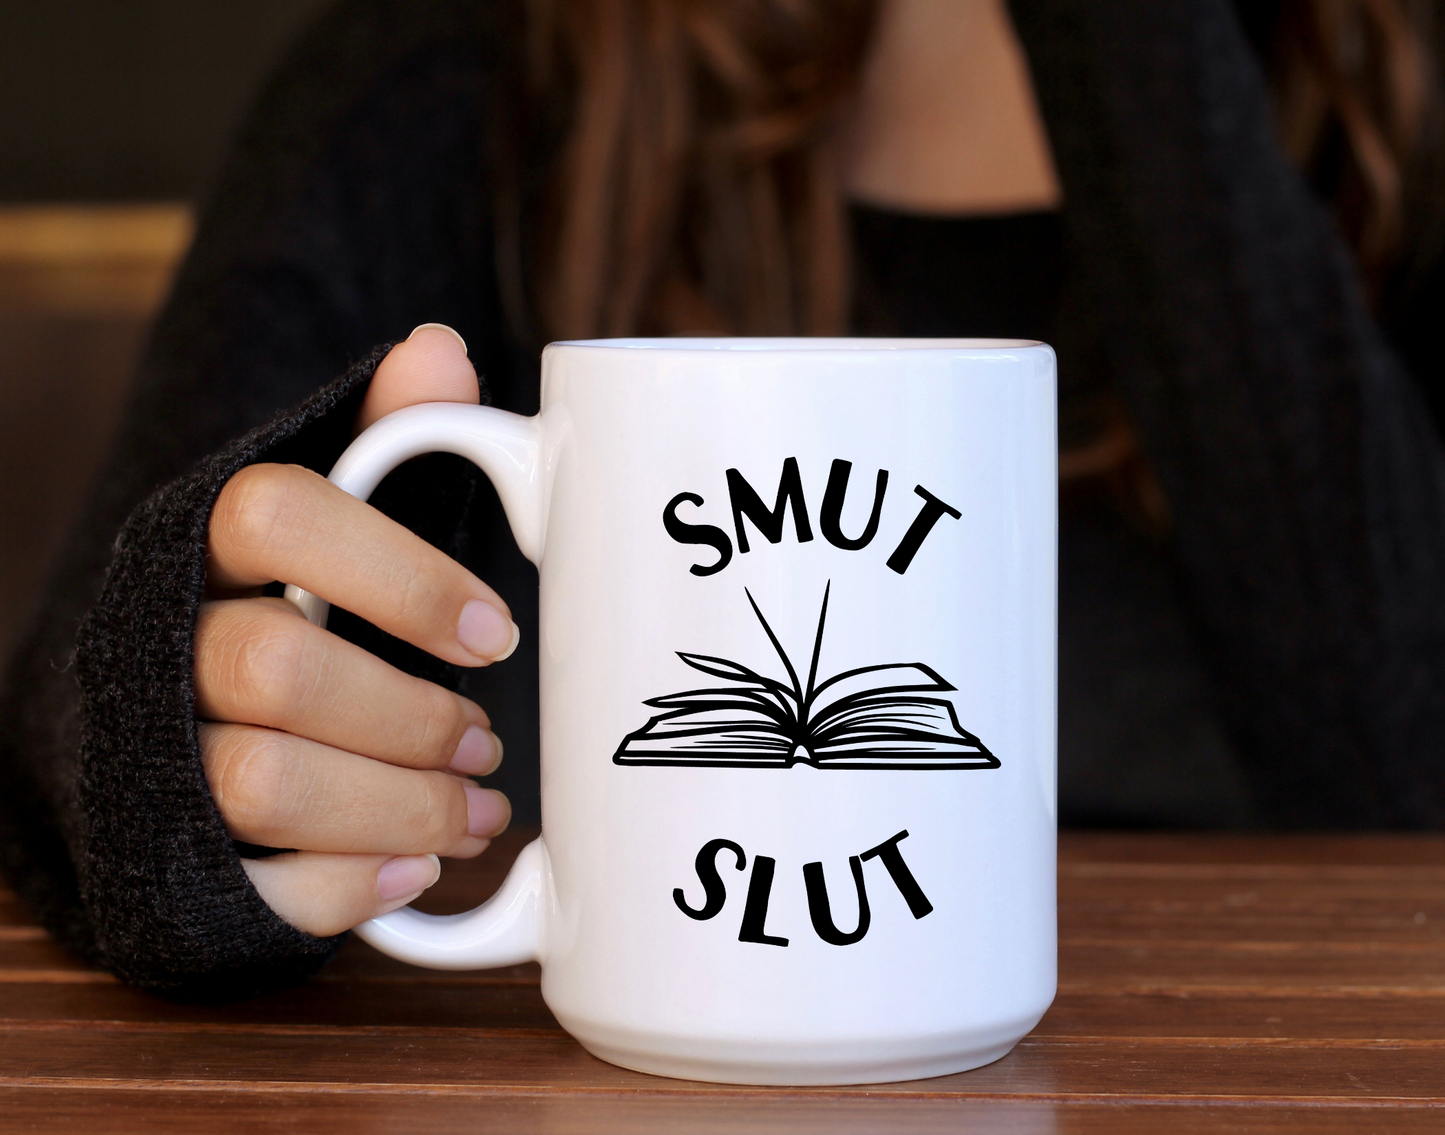 Smut Slut Book Mug